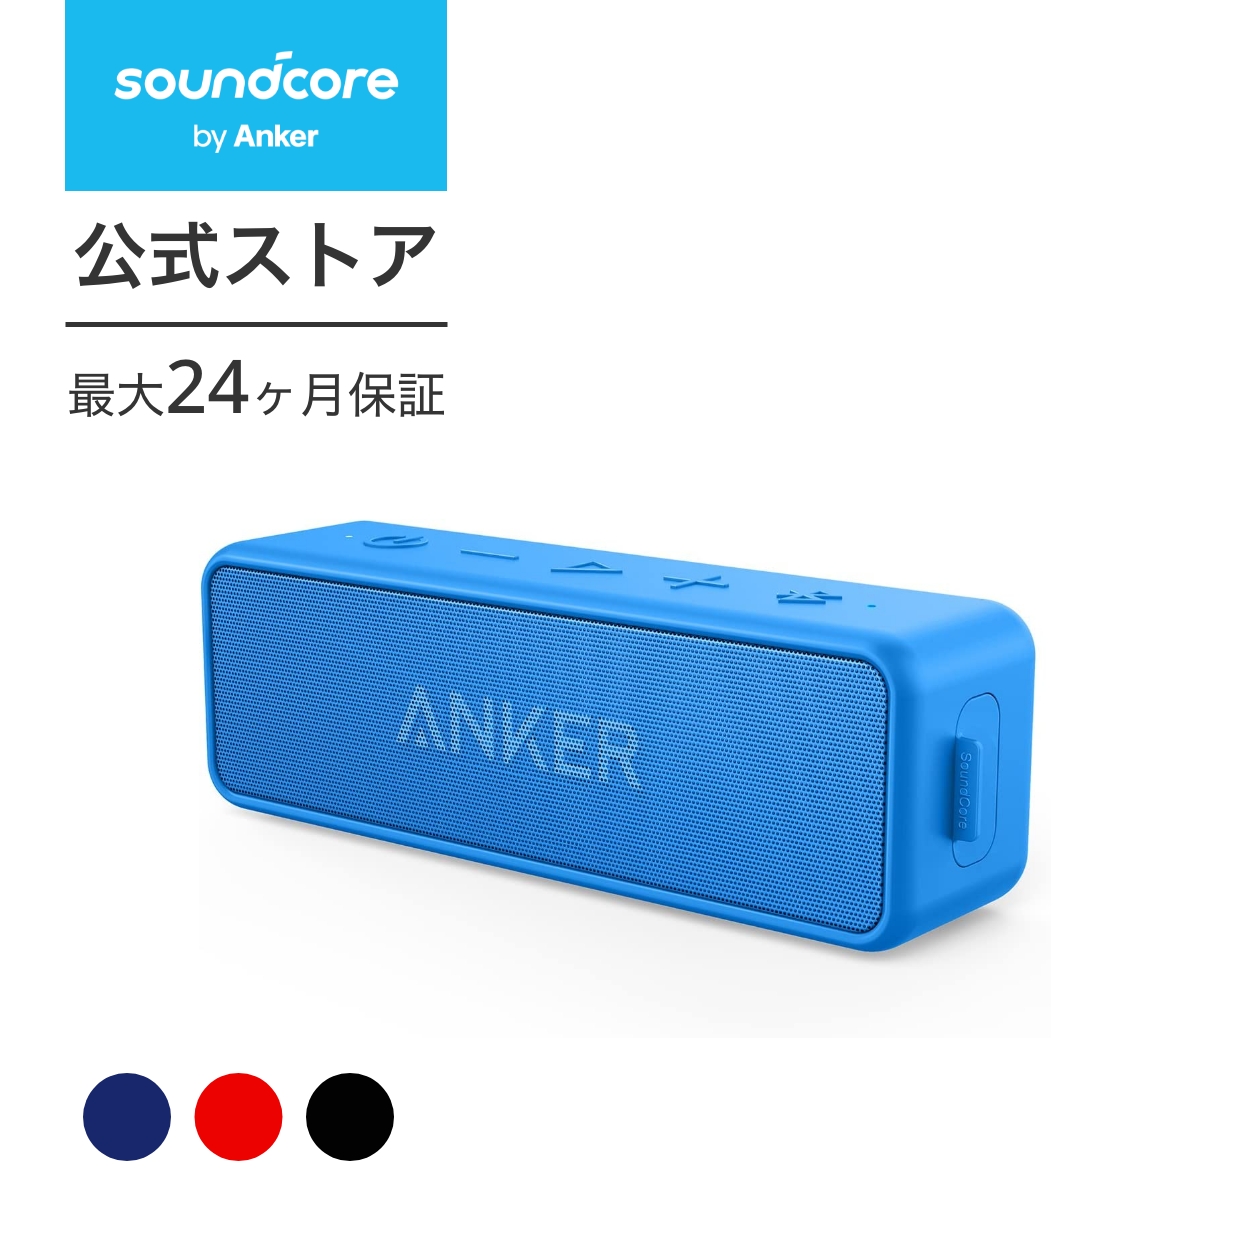 Anker SoundCore (12W Bluetooth スピーカー  24時間連続再生)【完全ワイヤレスステレオ対応/強化された低音 IPX7防水規格 デュアルドライバー/マイク内蔵】 アンカー ・ダイレクト